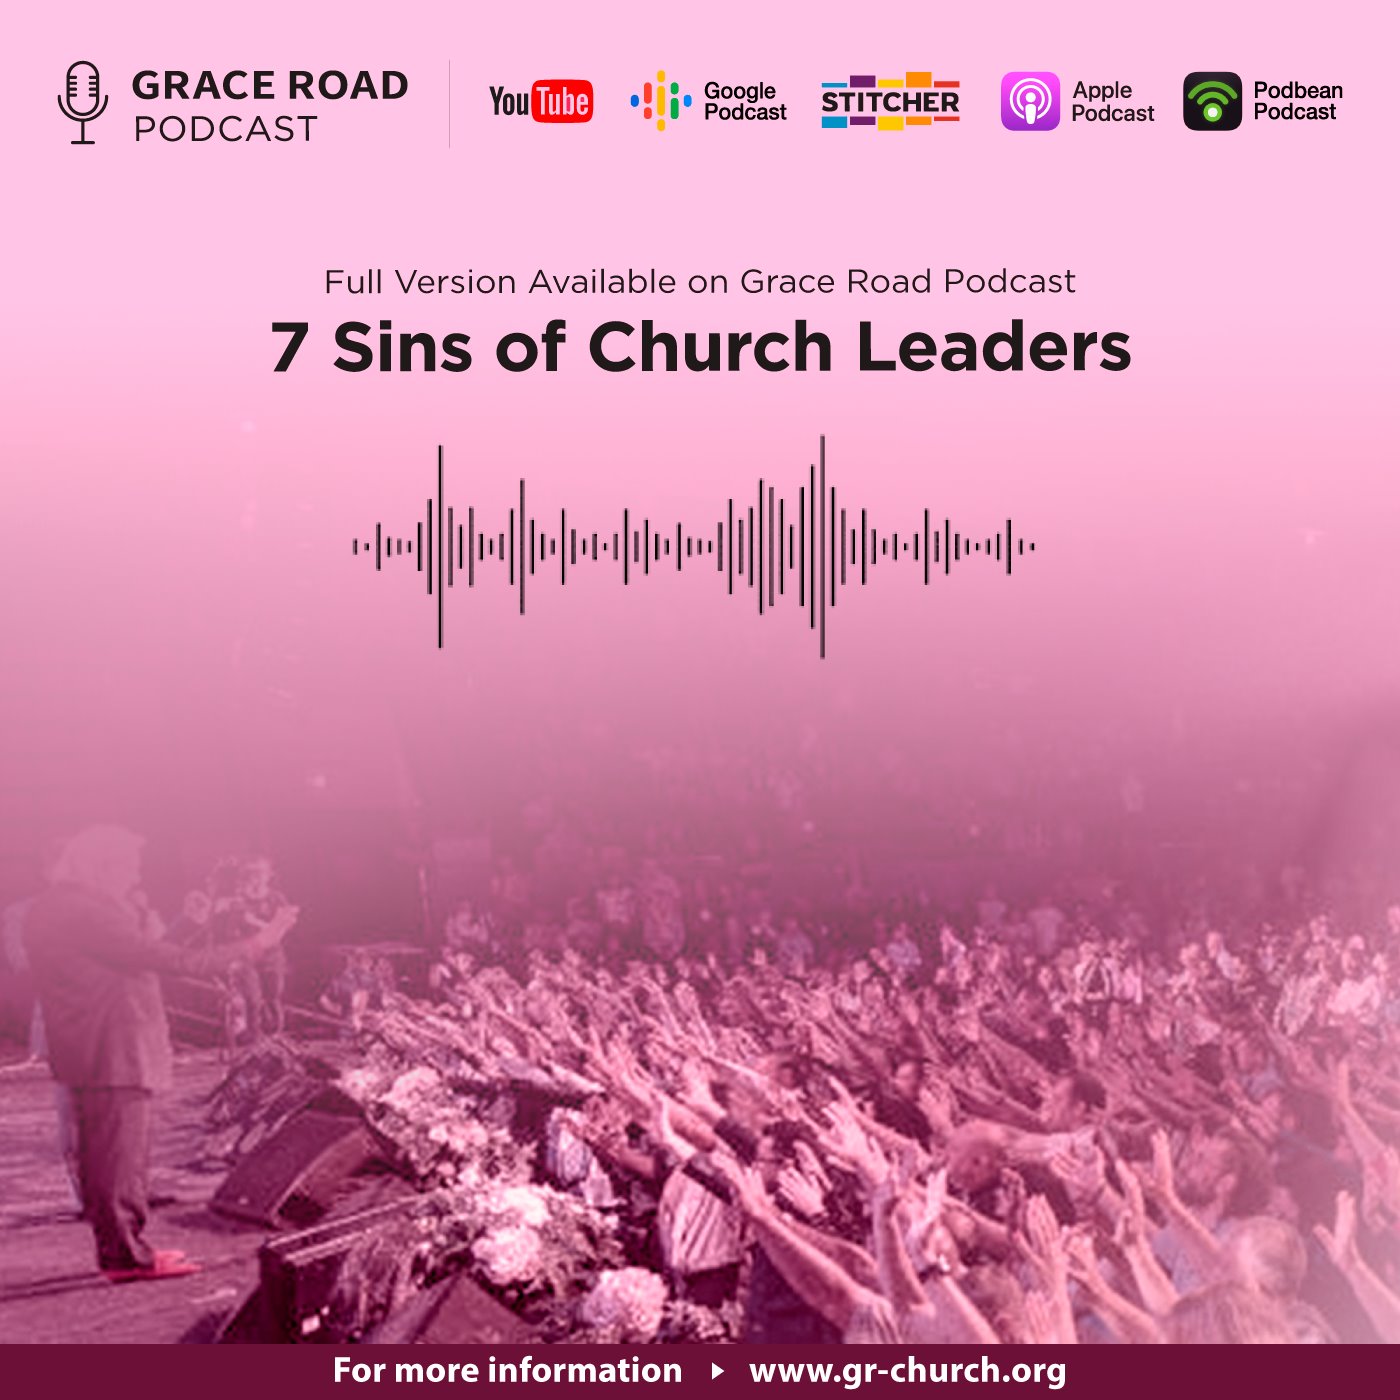 7 Sins of Church Leaders